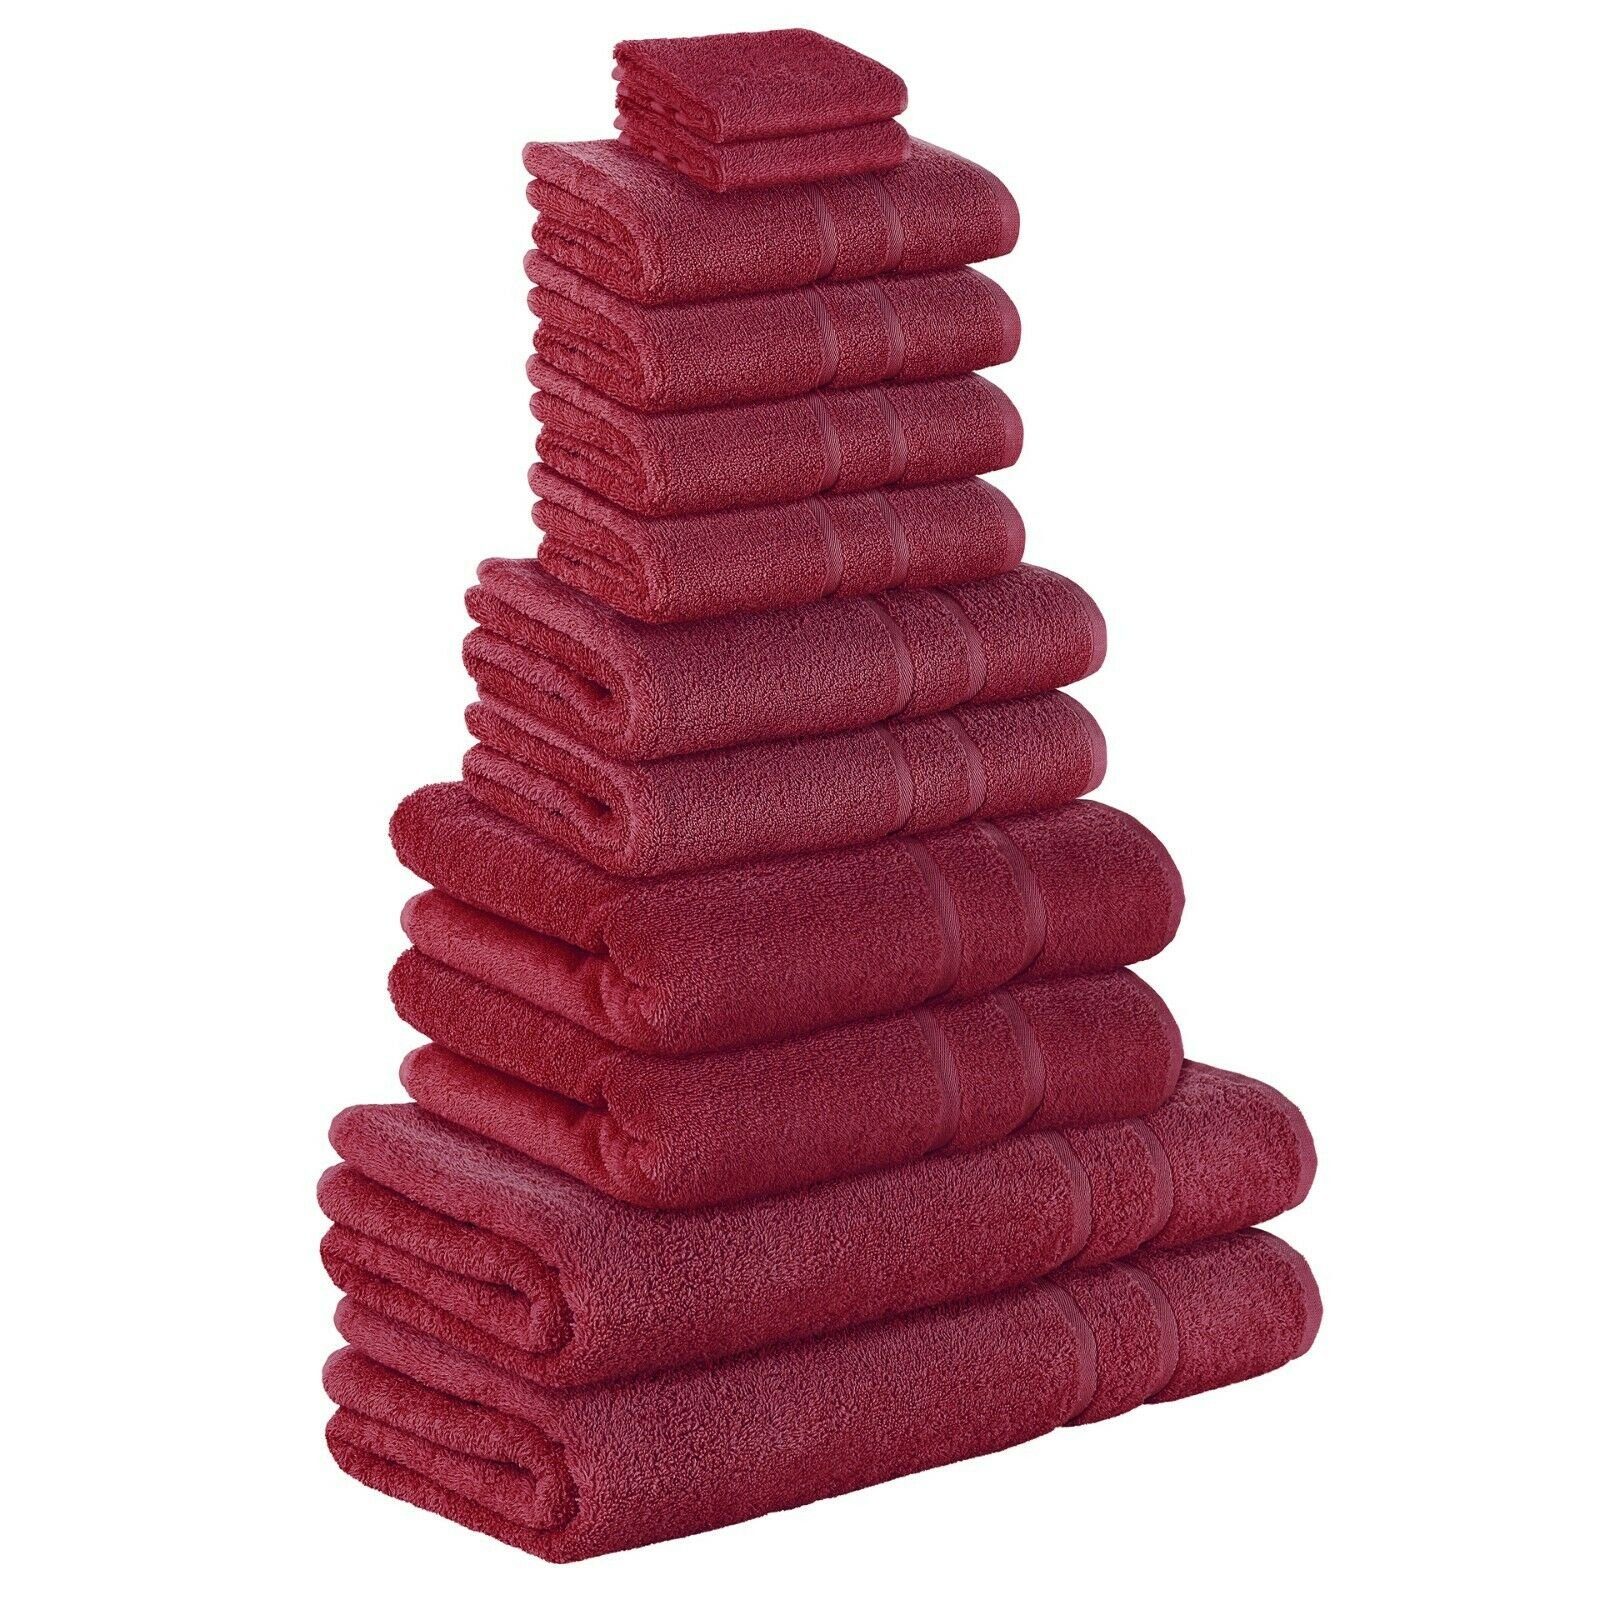 StickandShine Handtuch Set 4x Gästehandtuch 2x Handtücher 4x Duschtücher 2x Badetuch als SET in verschiedenen Farben (12 Teilig) 100% Baumwolle 500 GSM Frottee 12er Handtuch Pack, (Spar-SET) Bordeaux